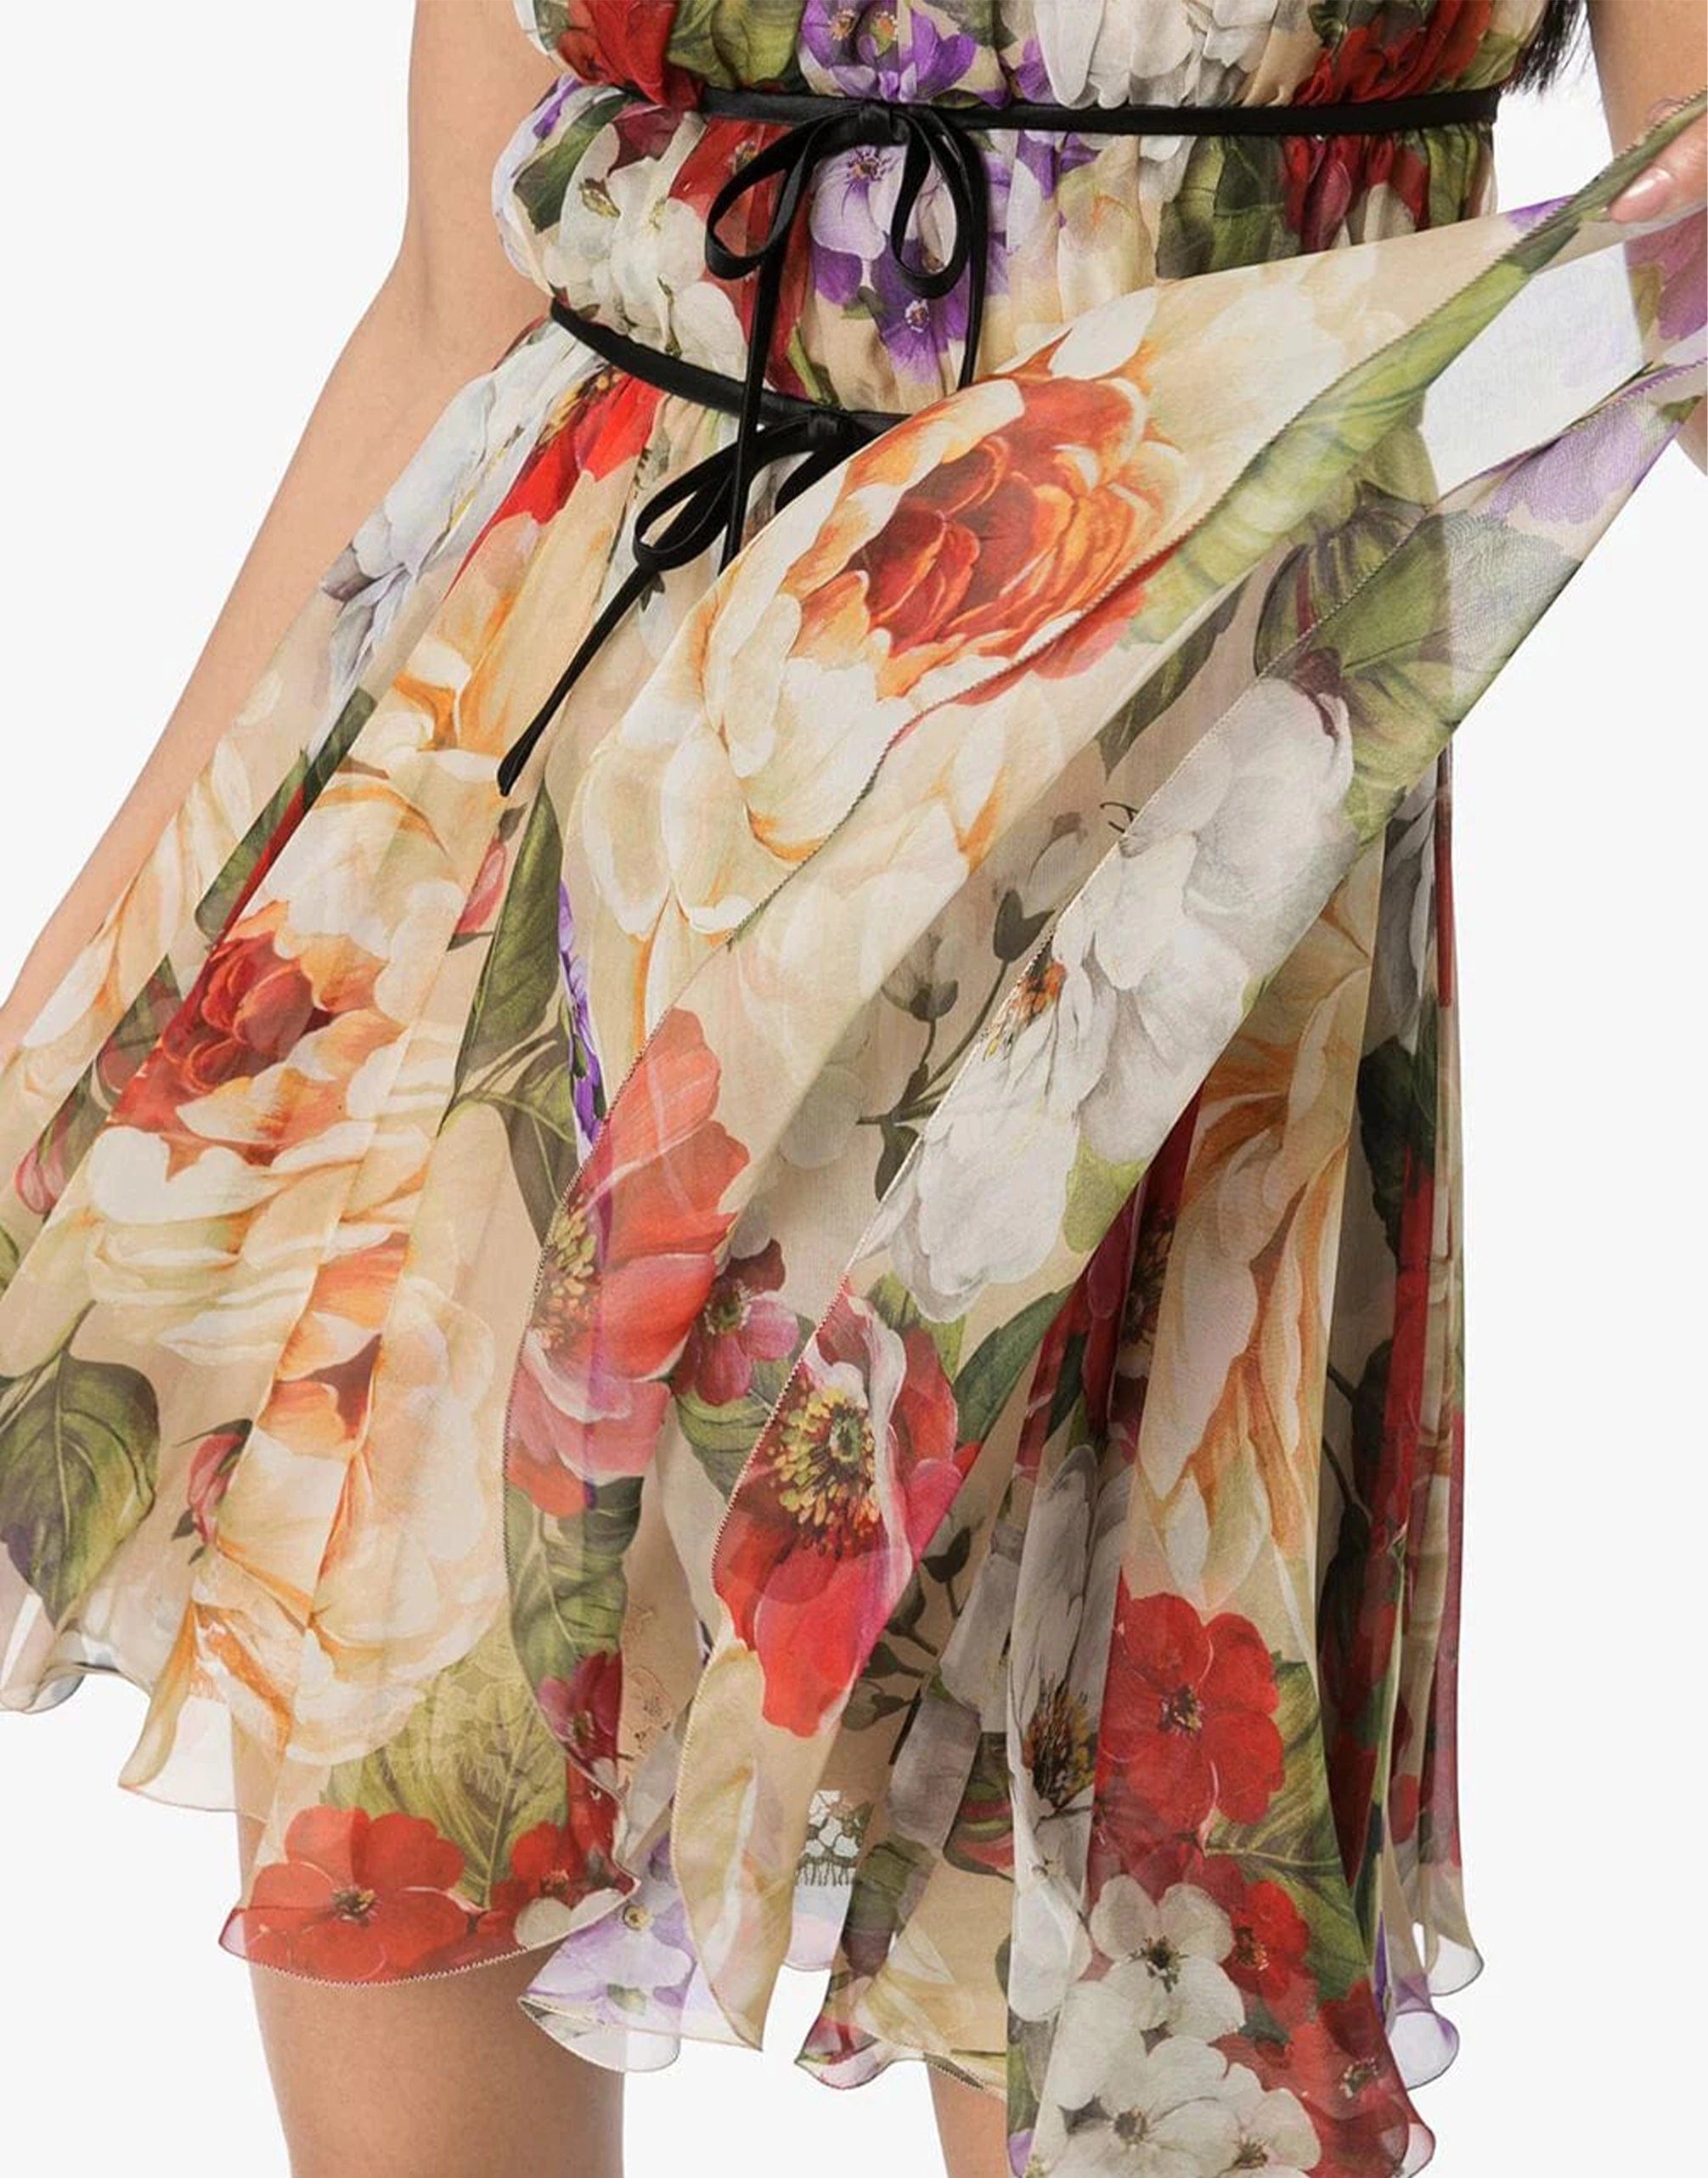 Dolce & Gabbana Floral-Print Chiffon Mini Dress